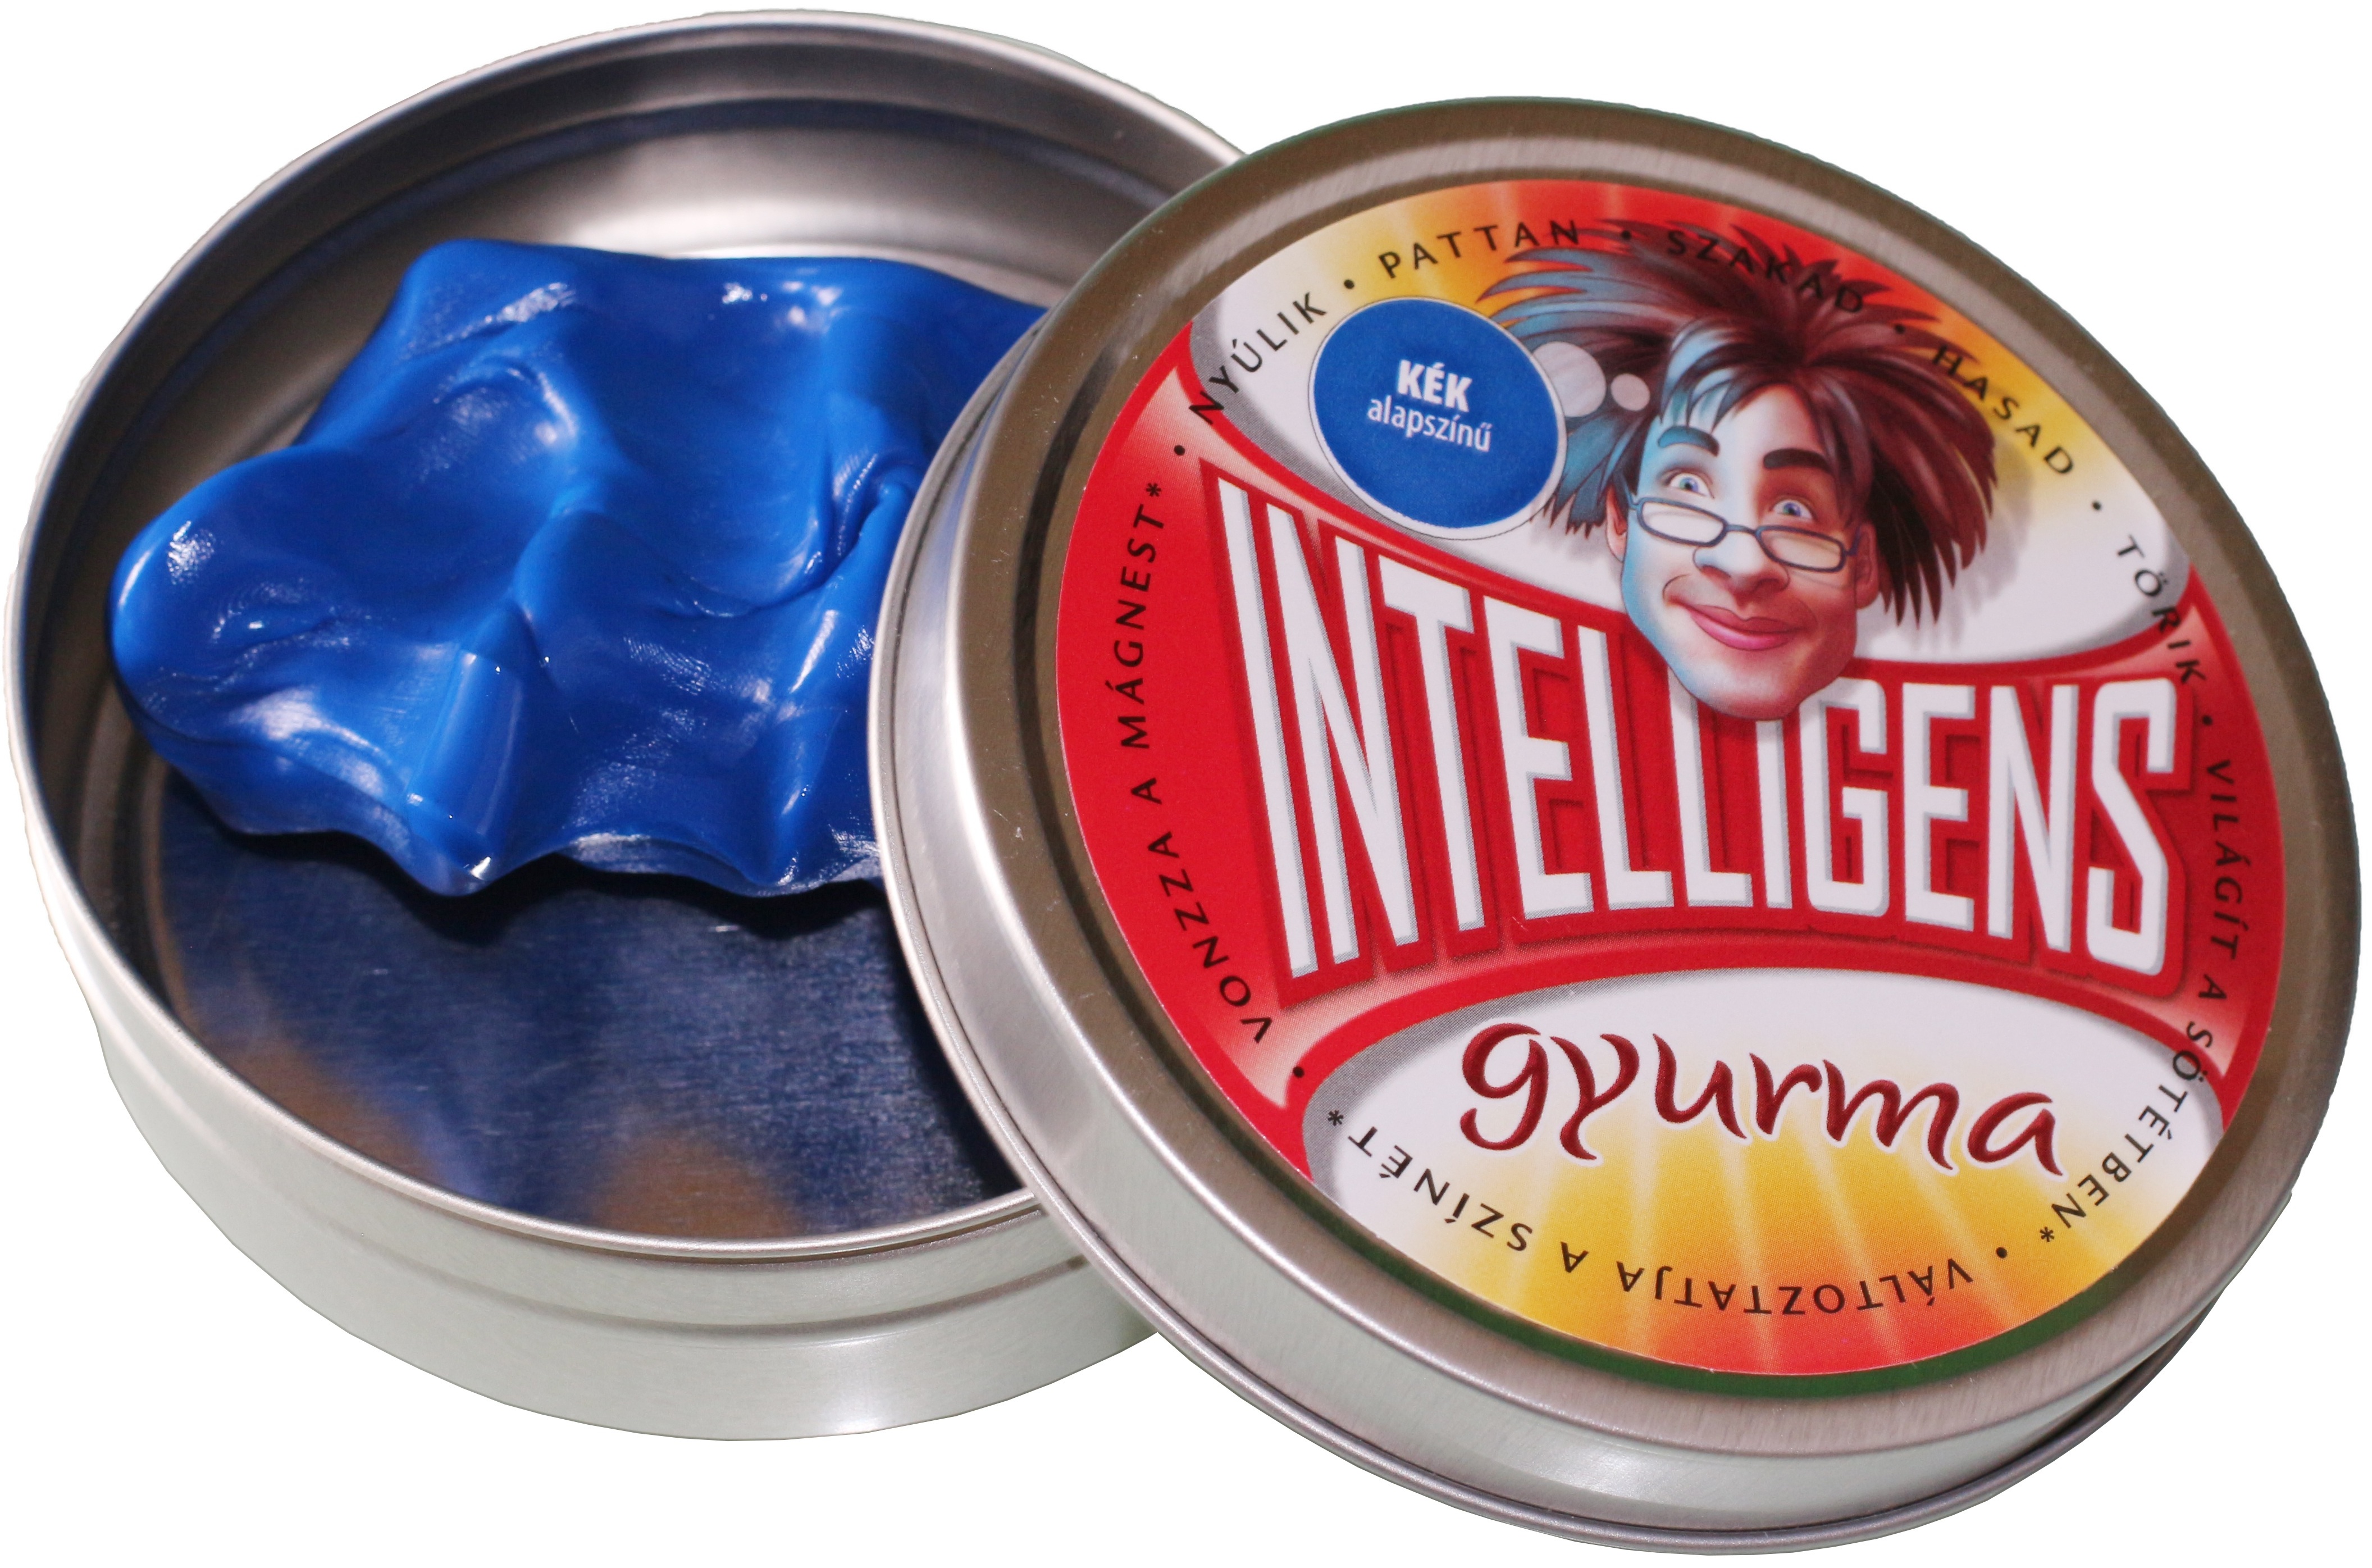 Intelligens Gyurma, kék